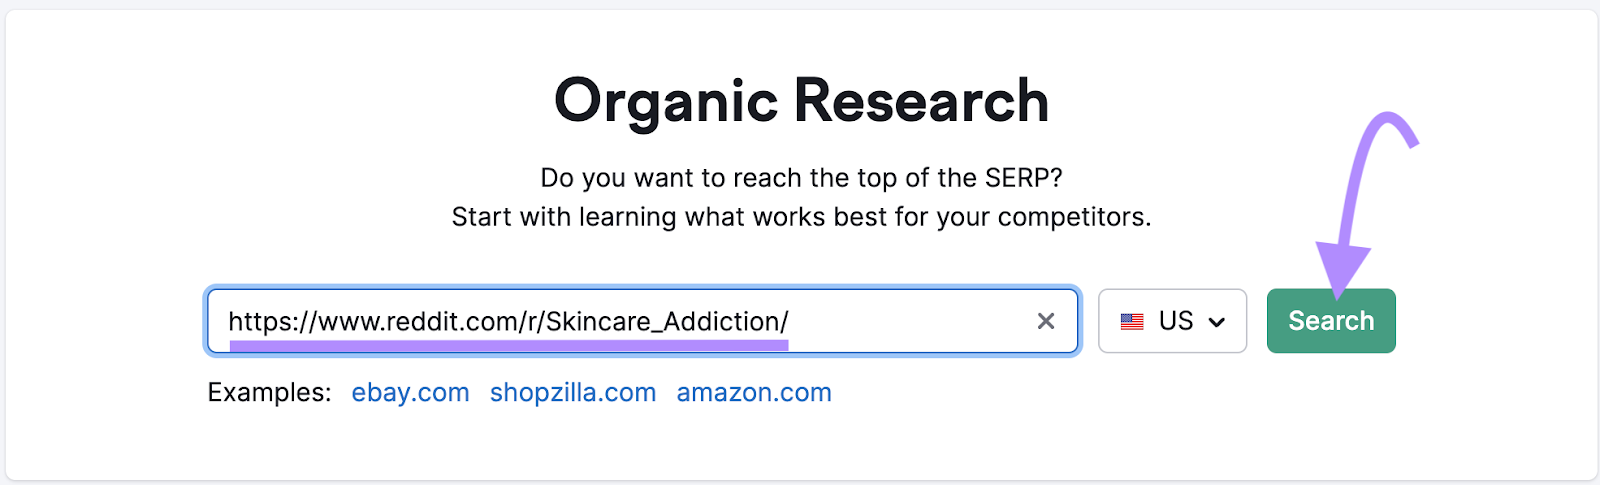 Organic Research search bar